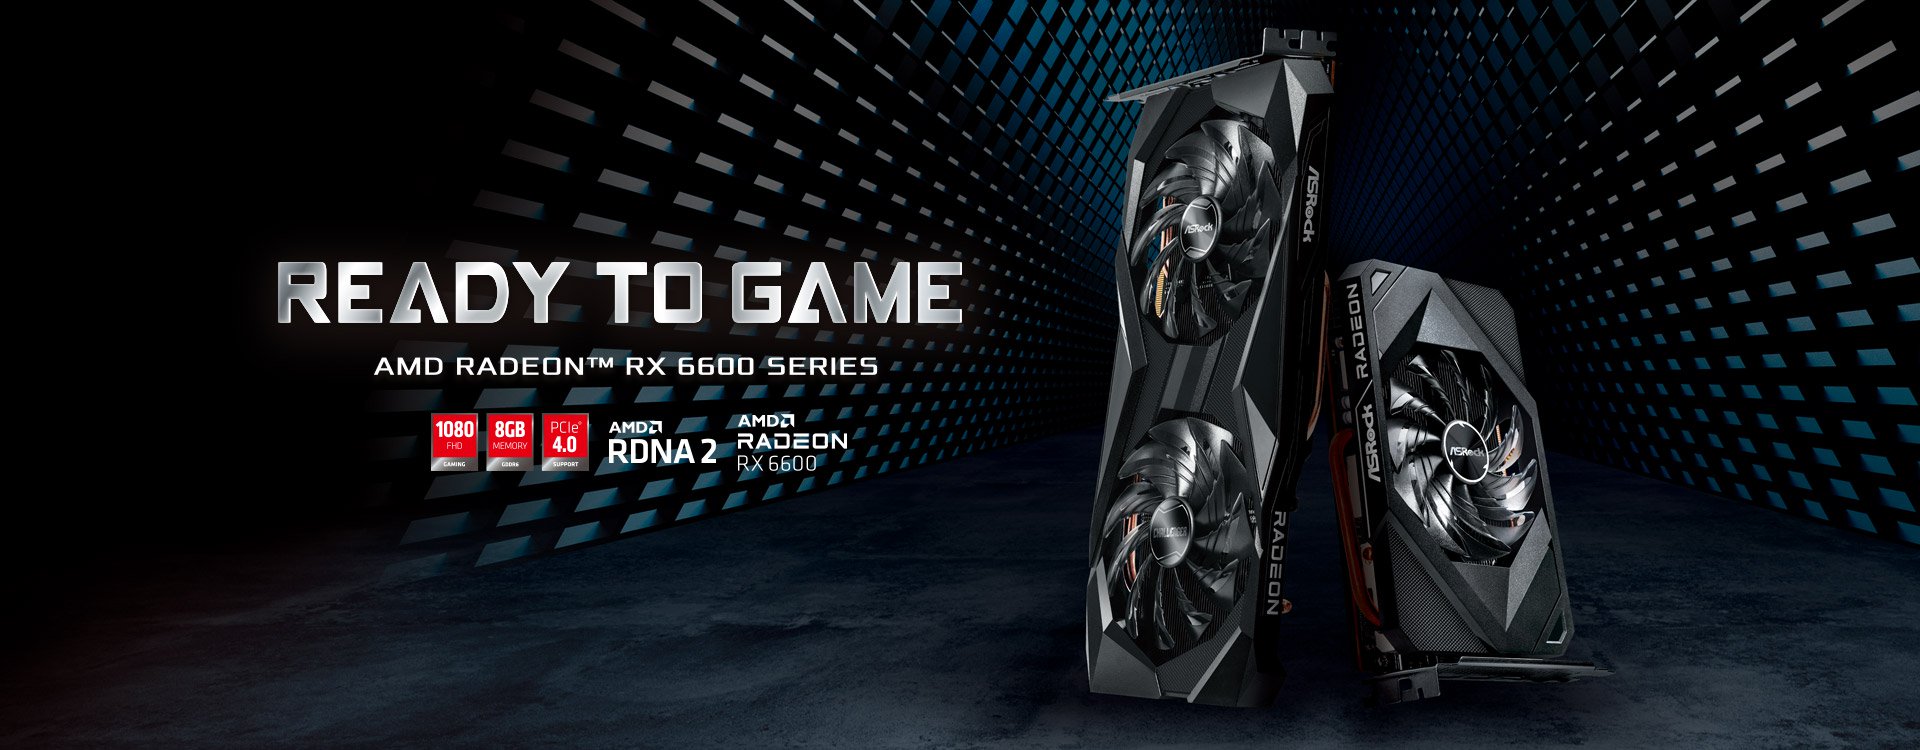 AMD RX 6600 Launch